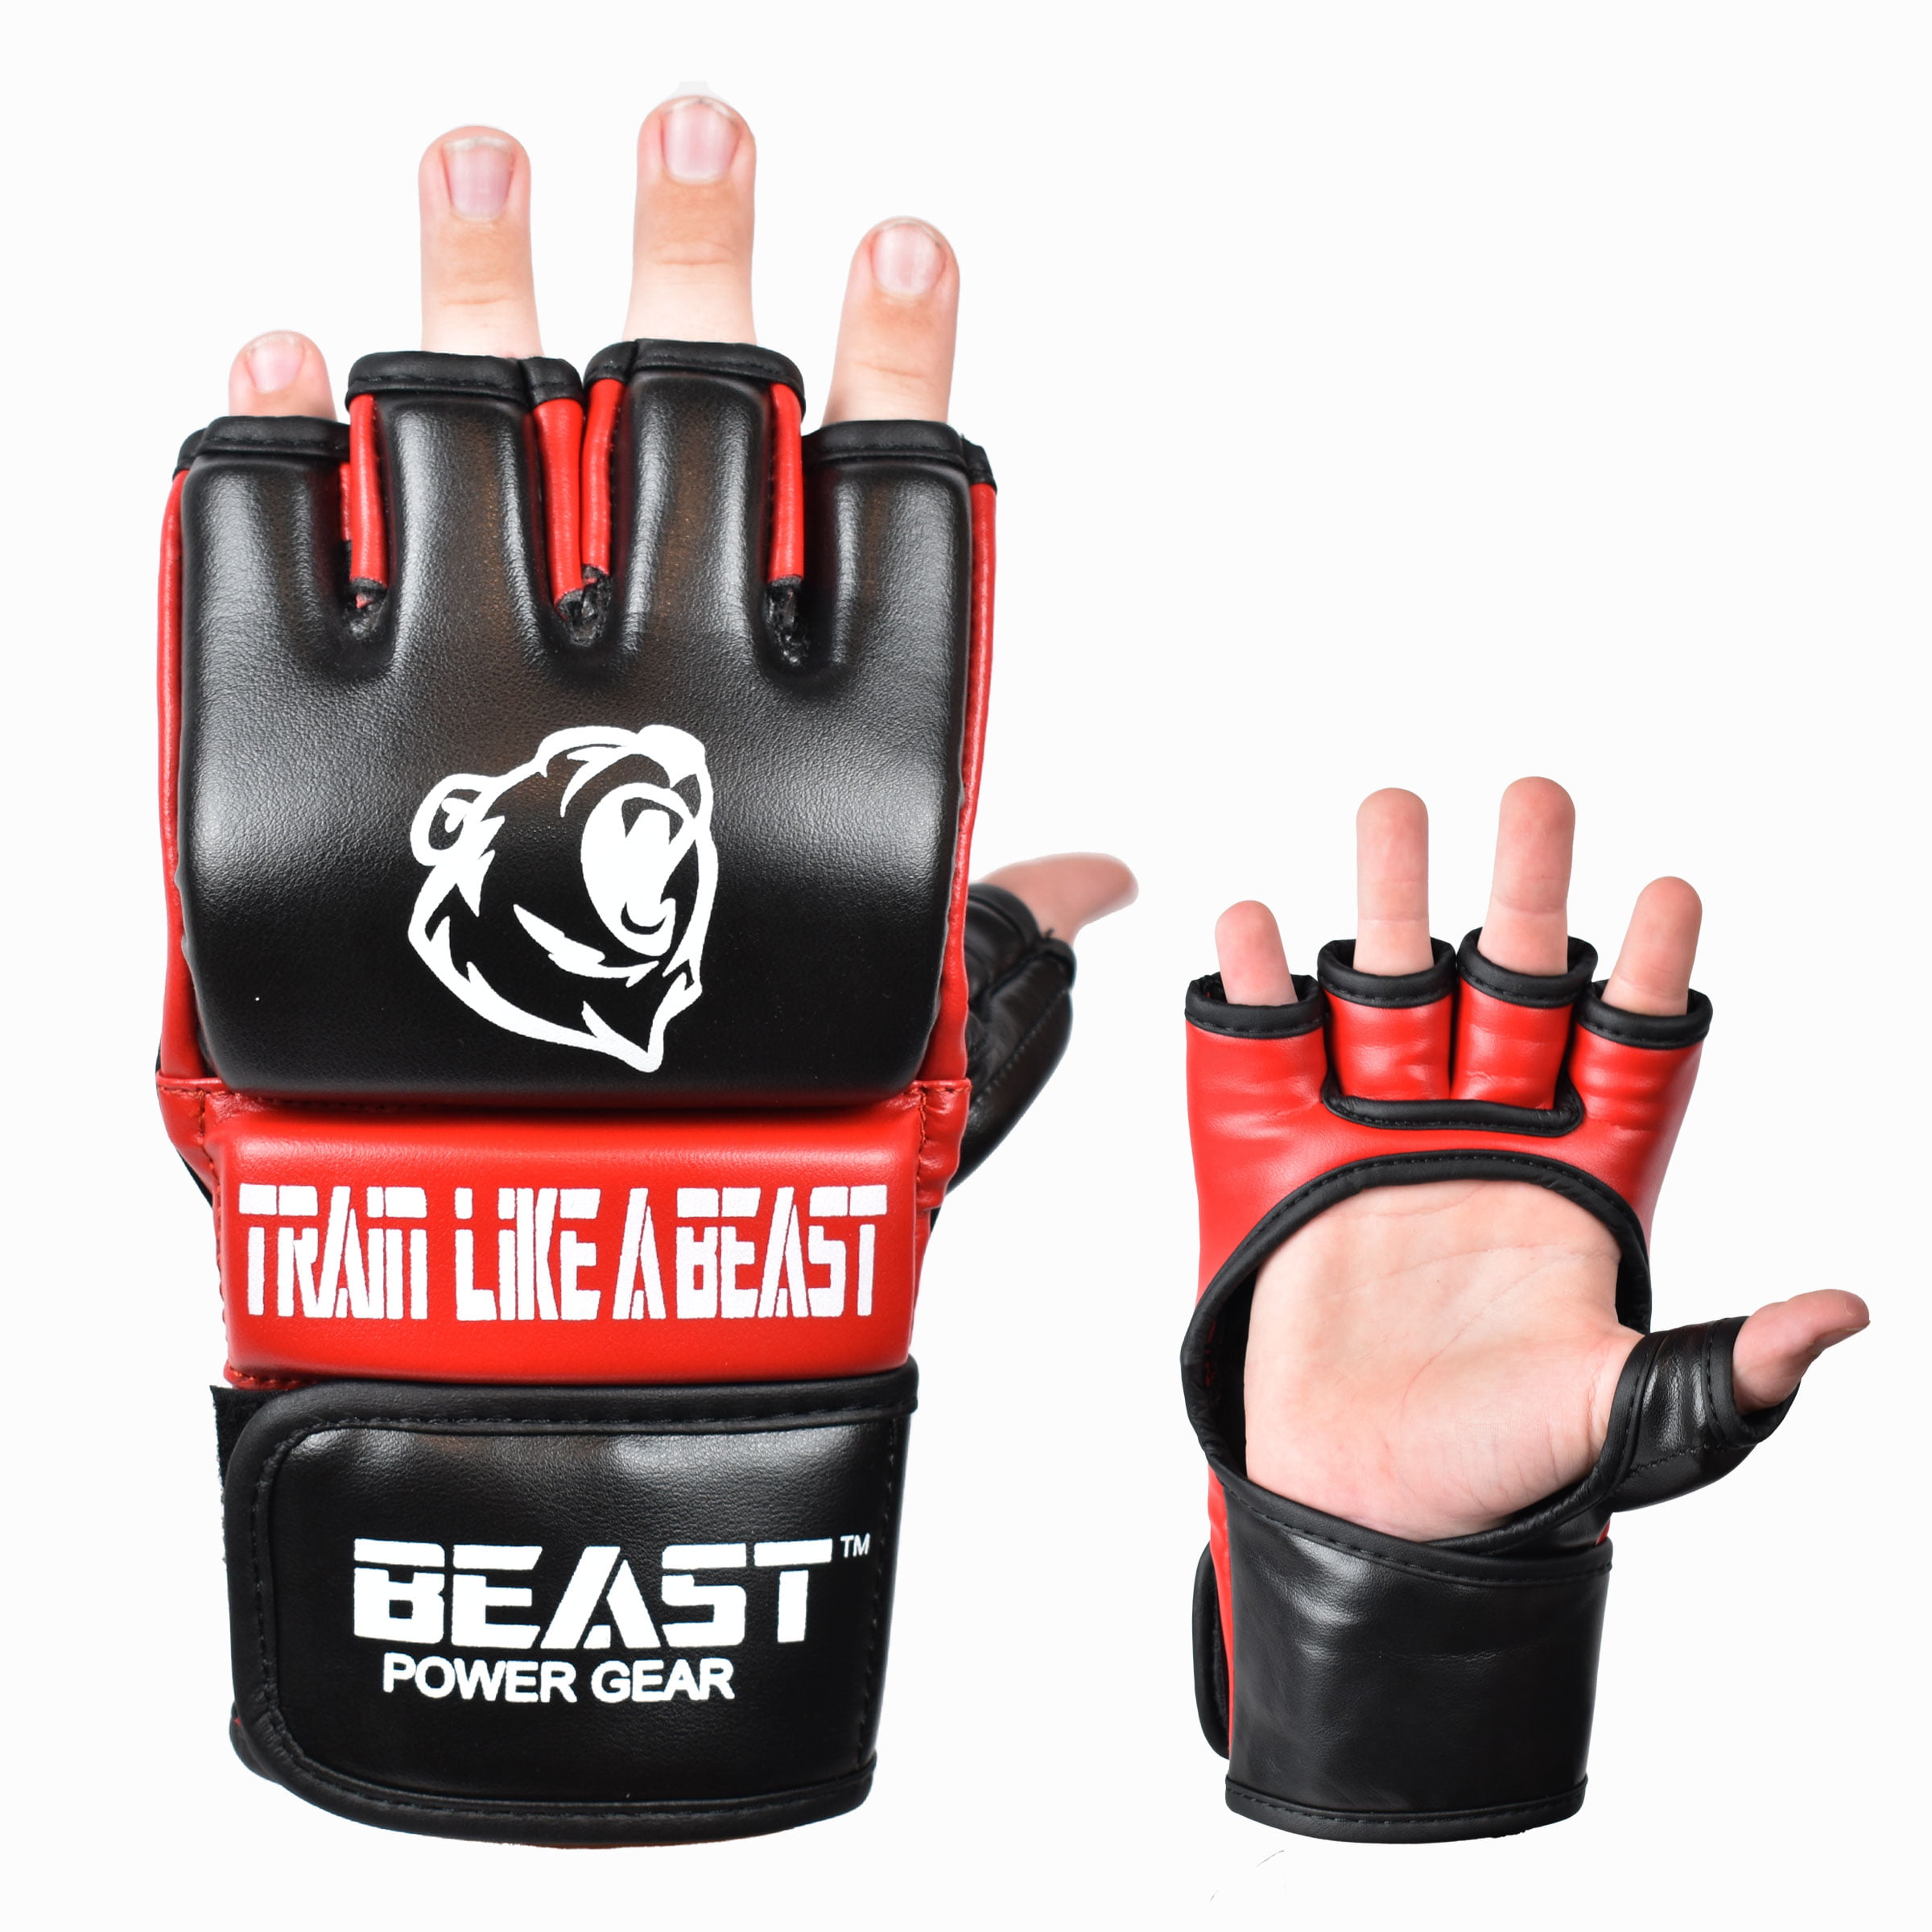 UFC Gloves Beastpowergear MMA Gloves Kickboxing Gloves with Open Palms 